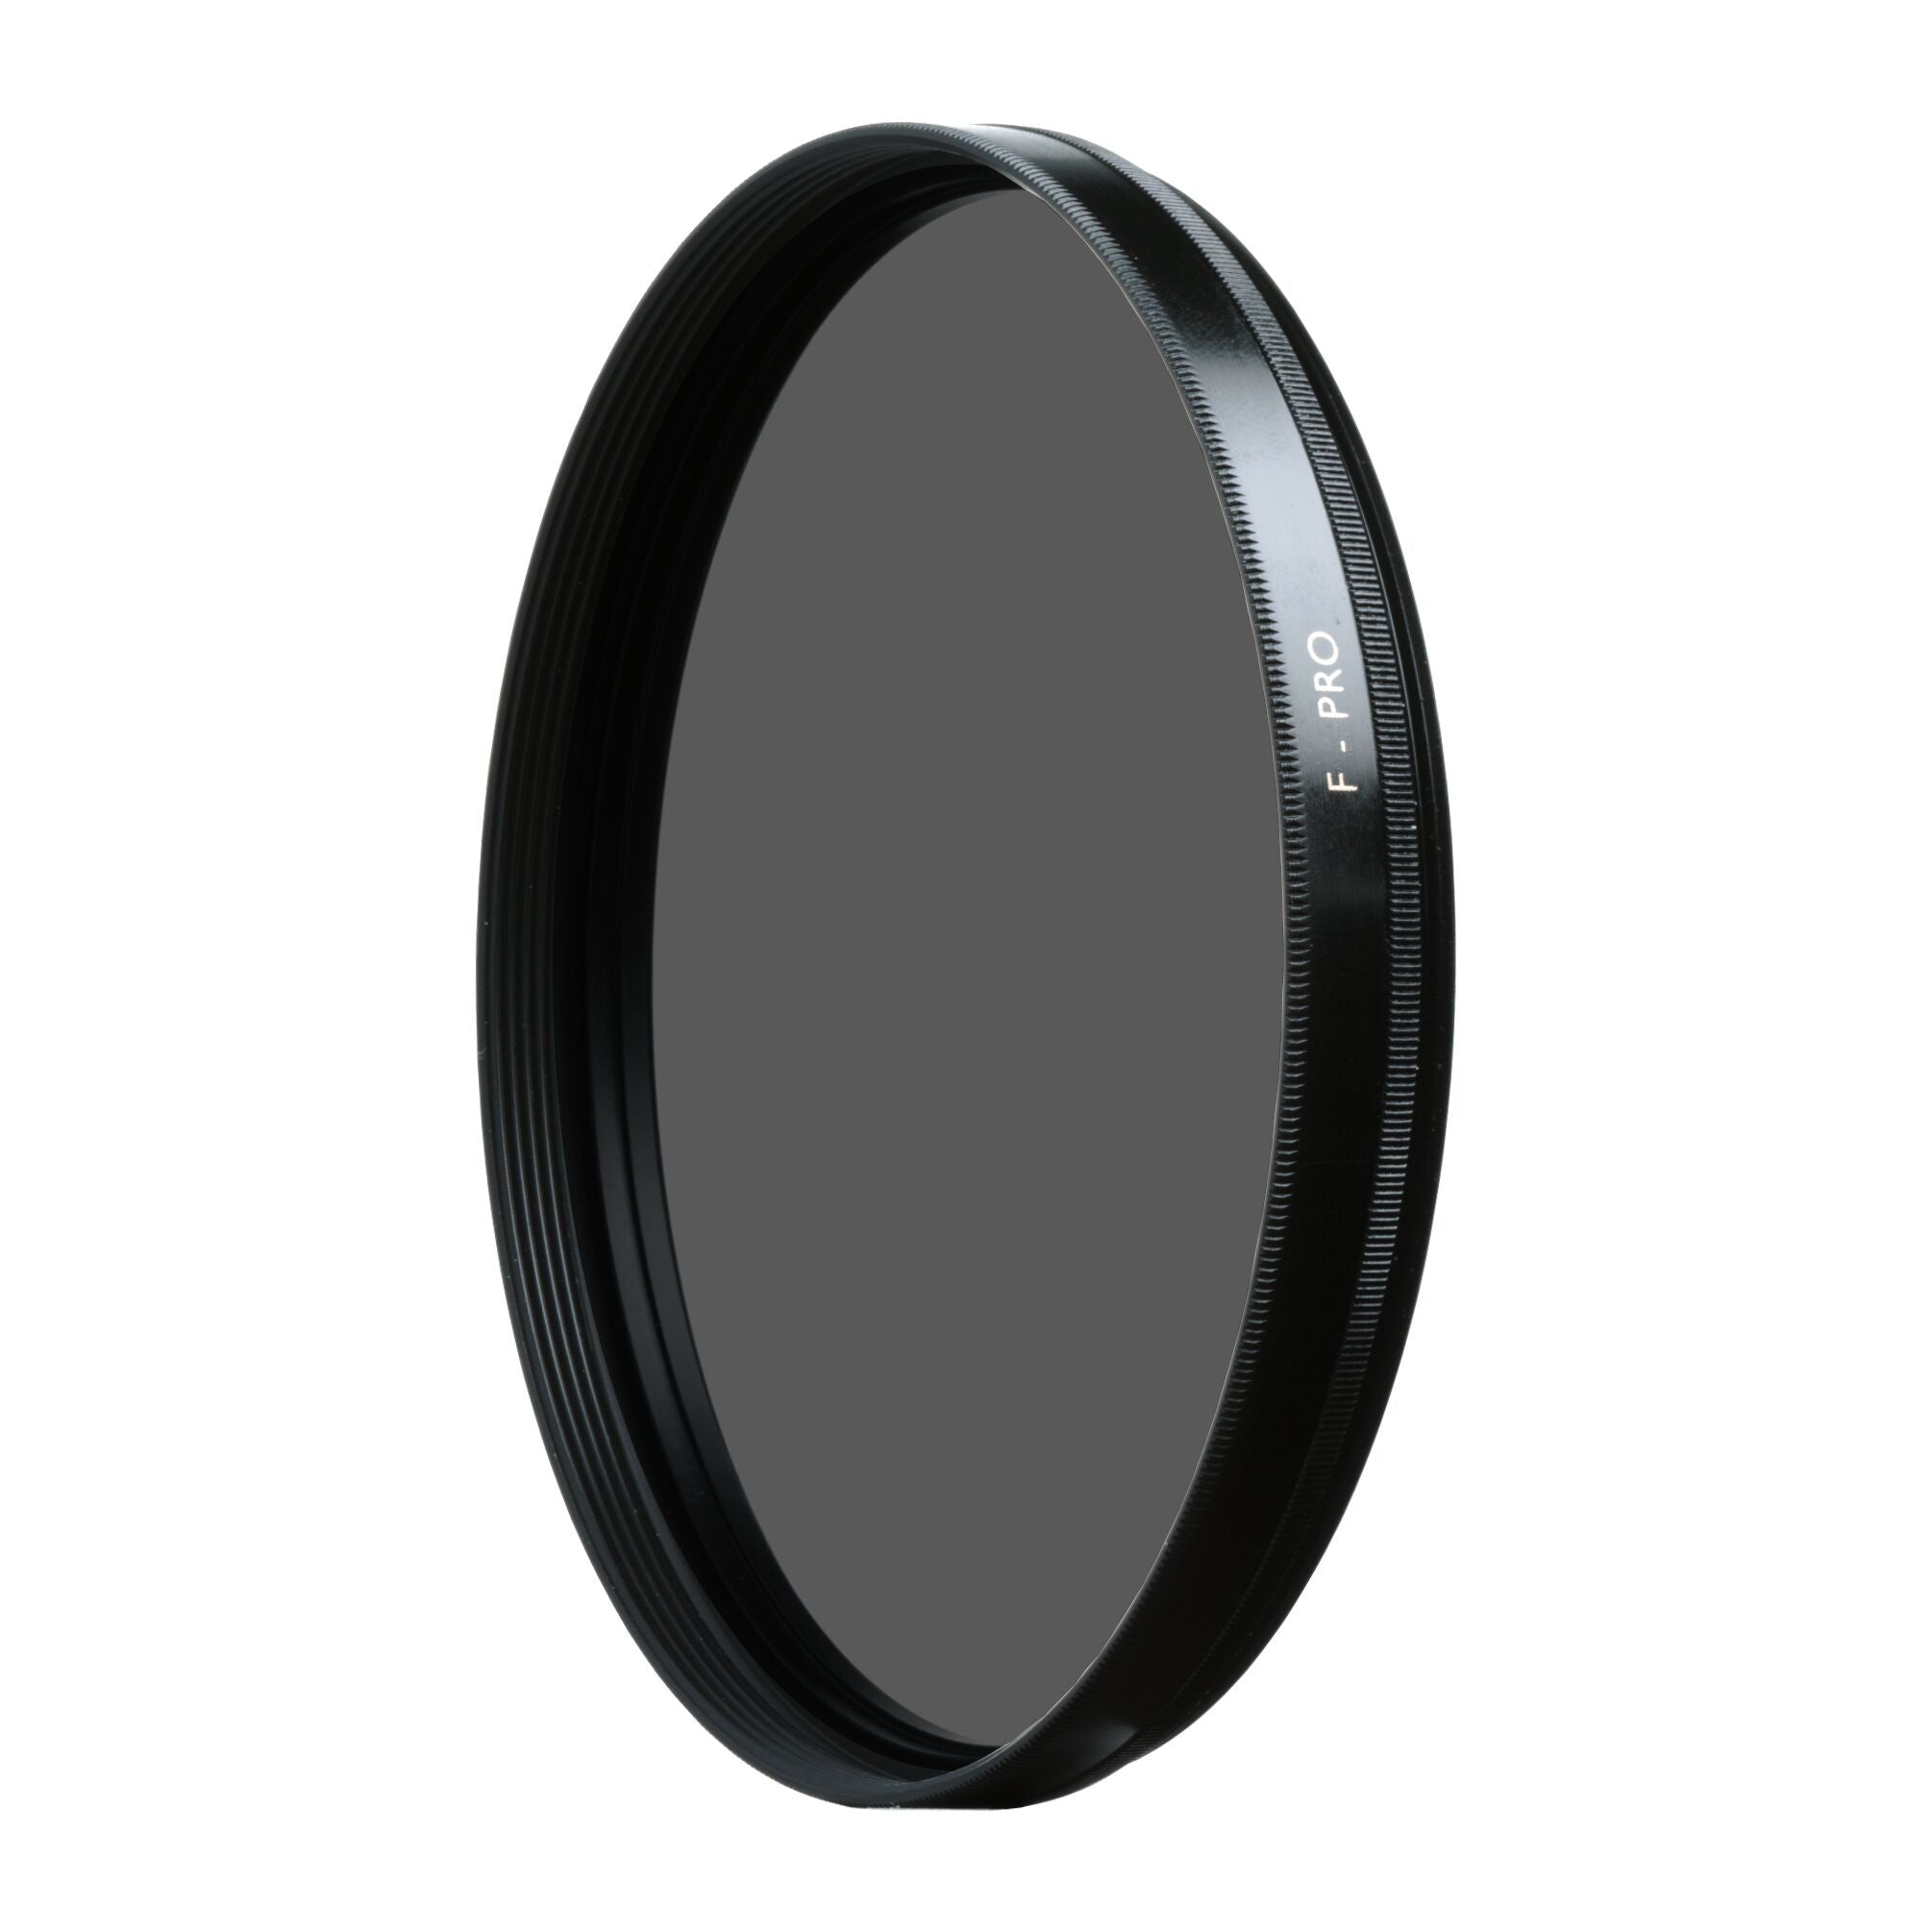 B+W 62mm Circular Polarizer Filter, lenses filters polarizer, B+W - Pictureline 